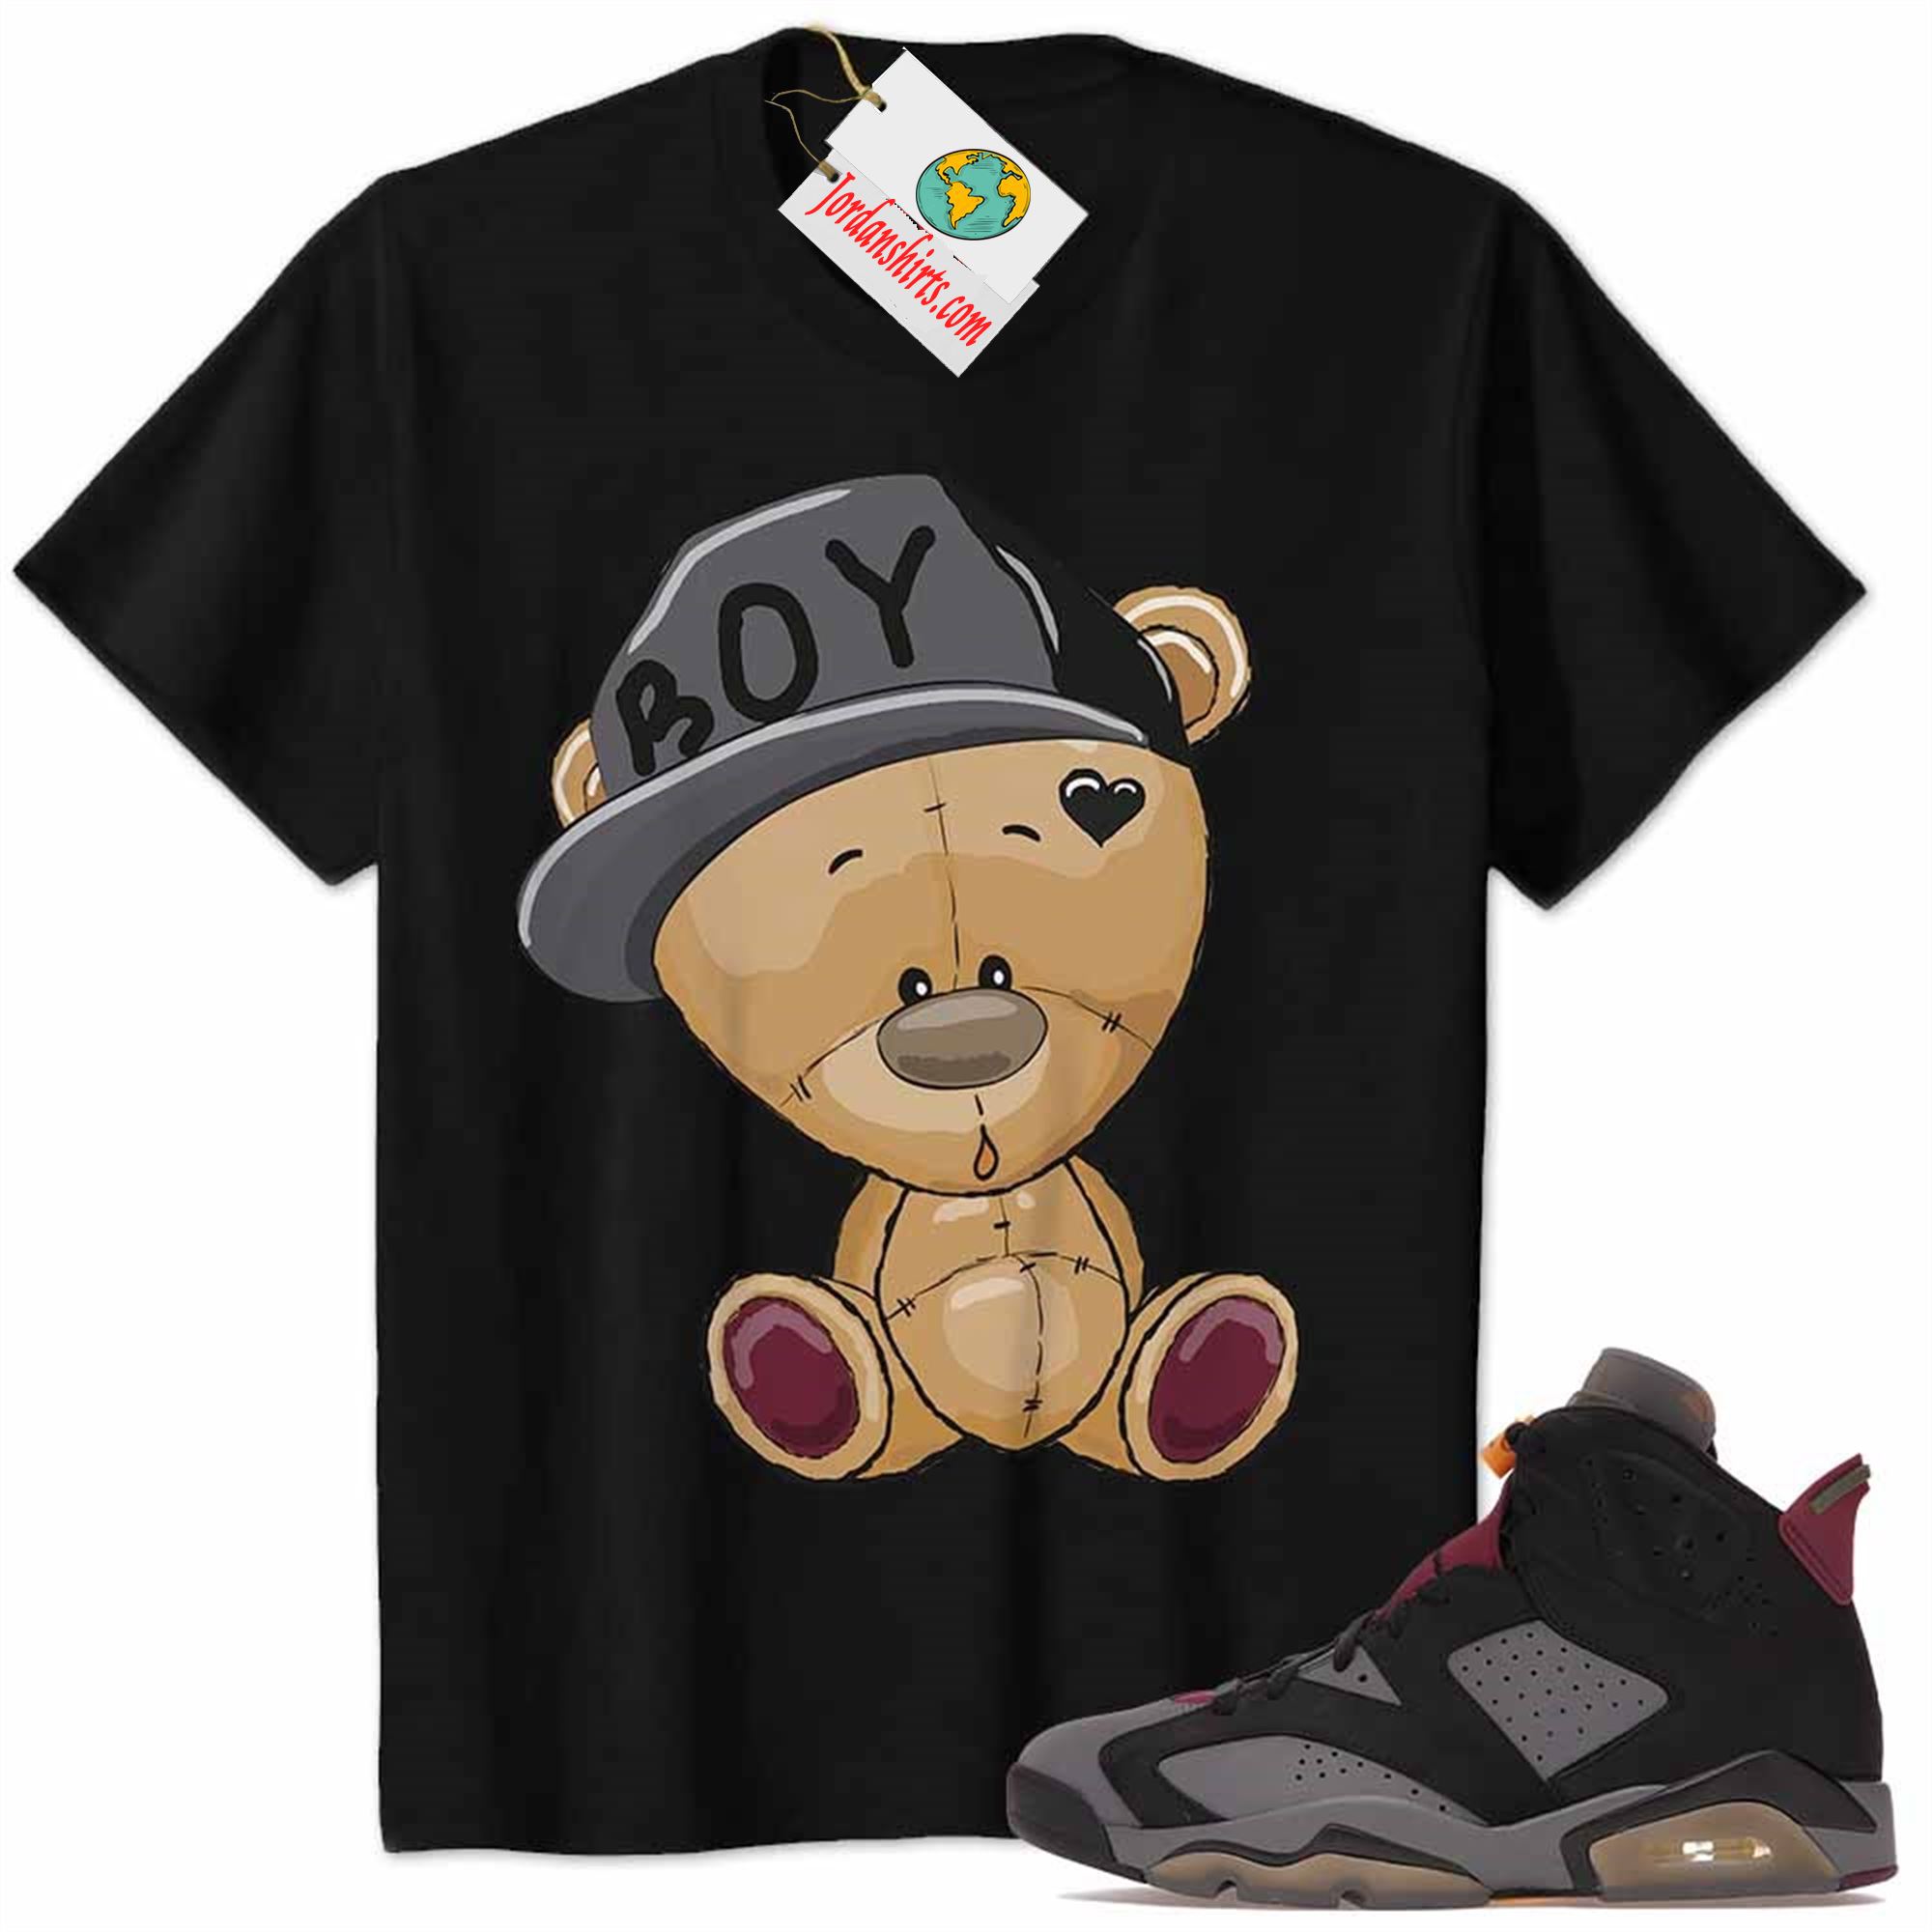 Jordan 6 Shirt, Jordan 6 Bordeaux Shirt Cute Baby Teddy Bear Black Plus Size Up To 5xl